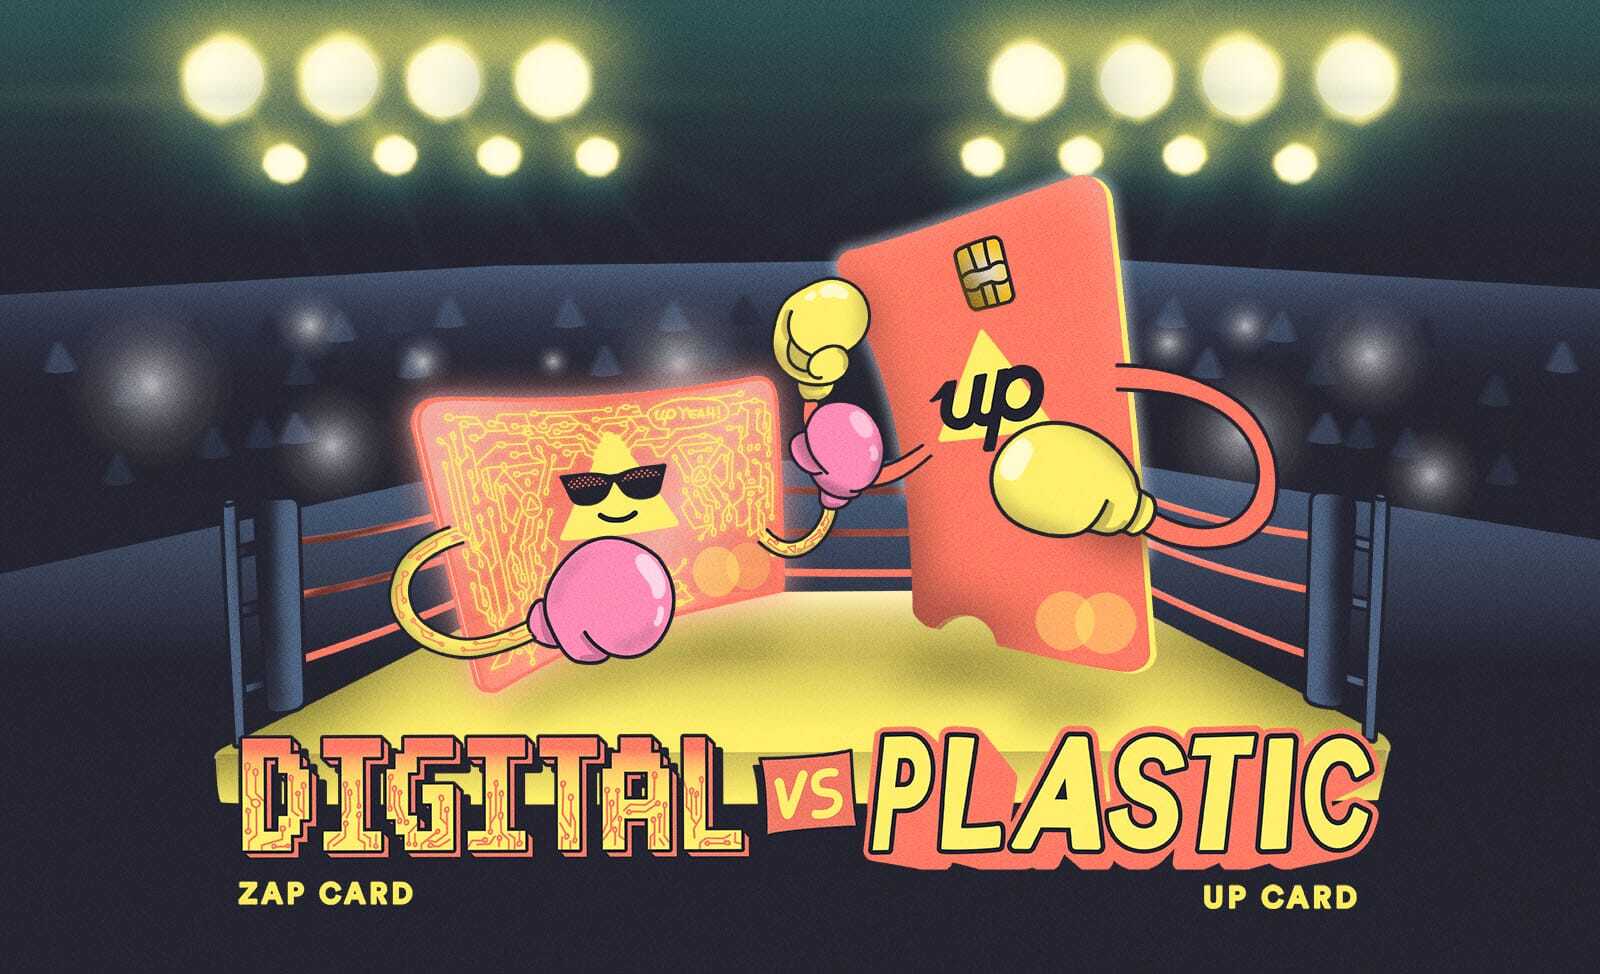 Digital vs Plastic: Up card